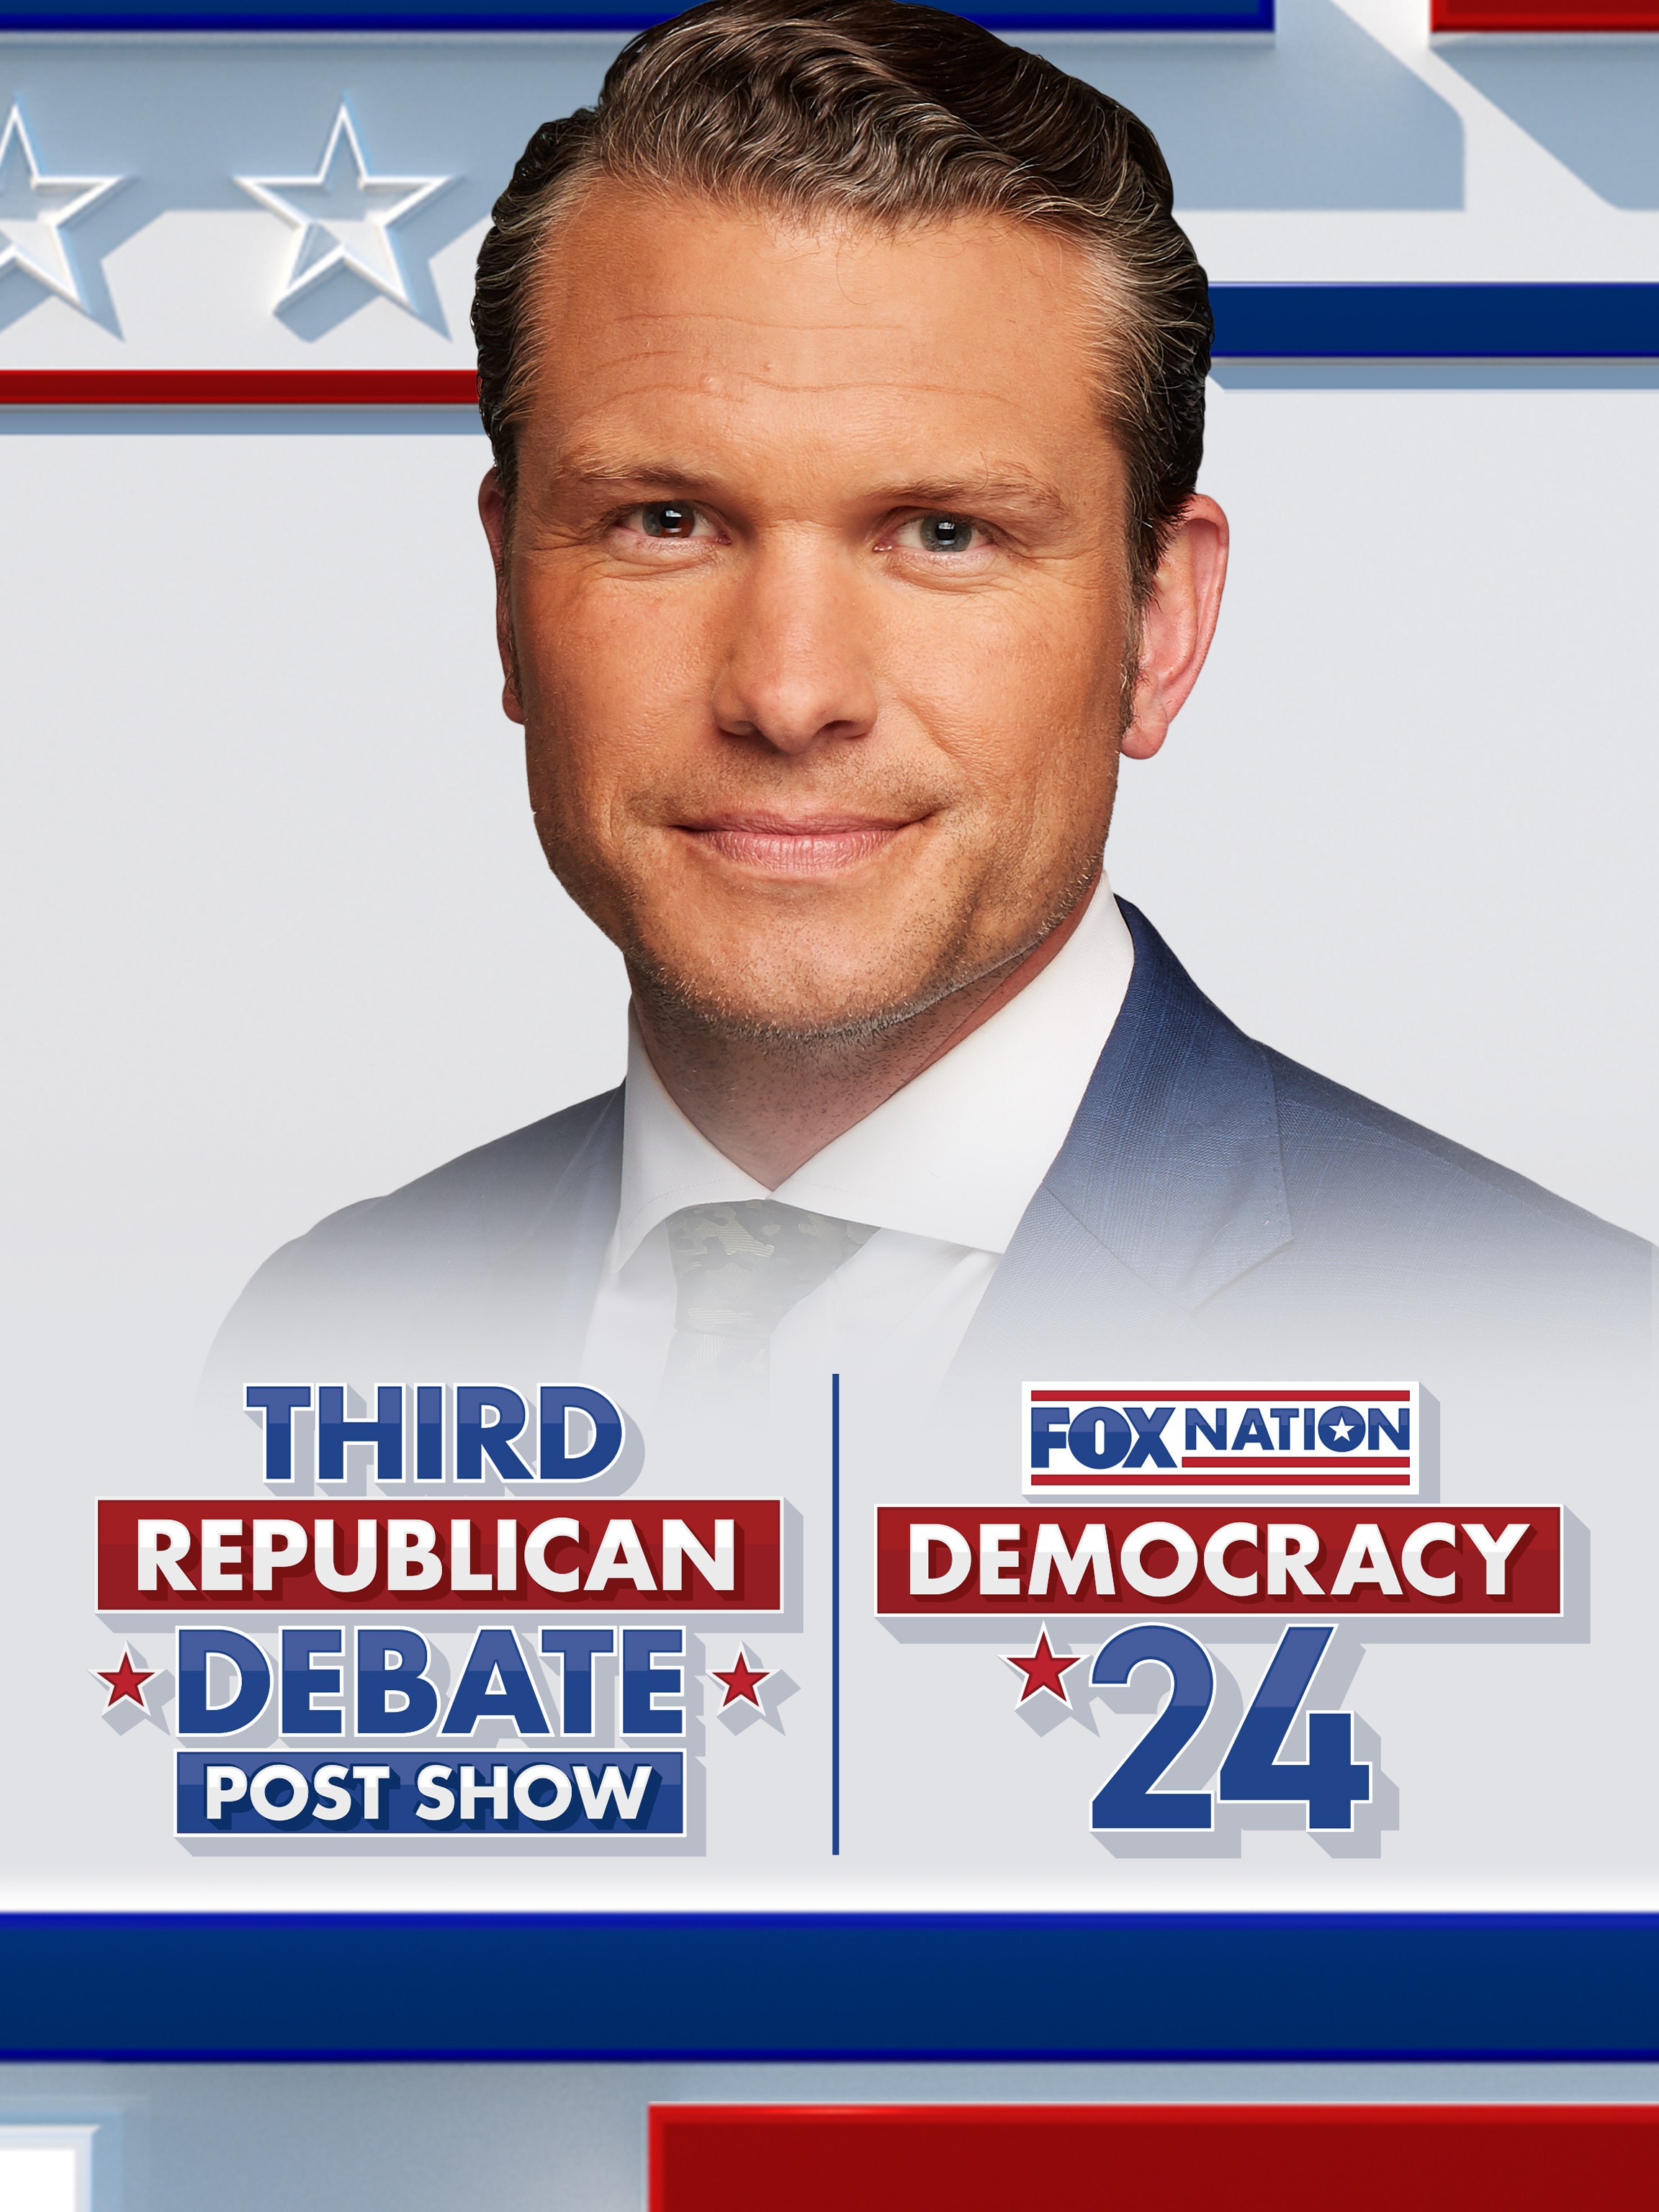 Third Republican Debate Post Show: Democracy 2024 dcg-mark-poster